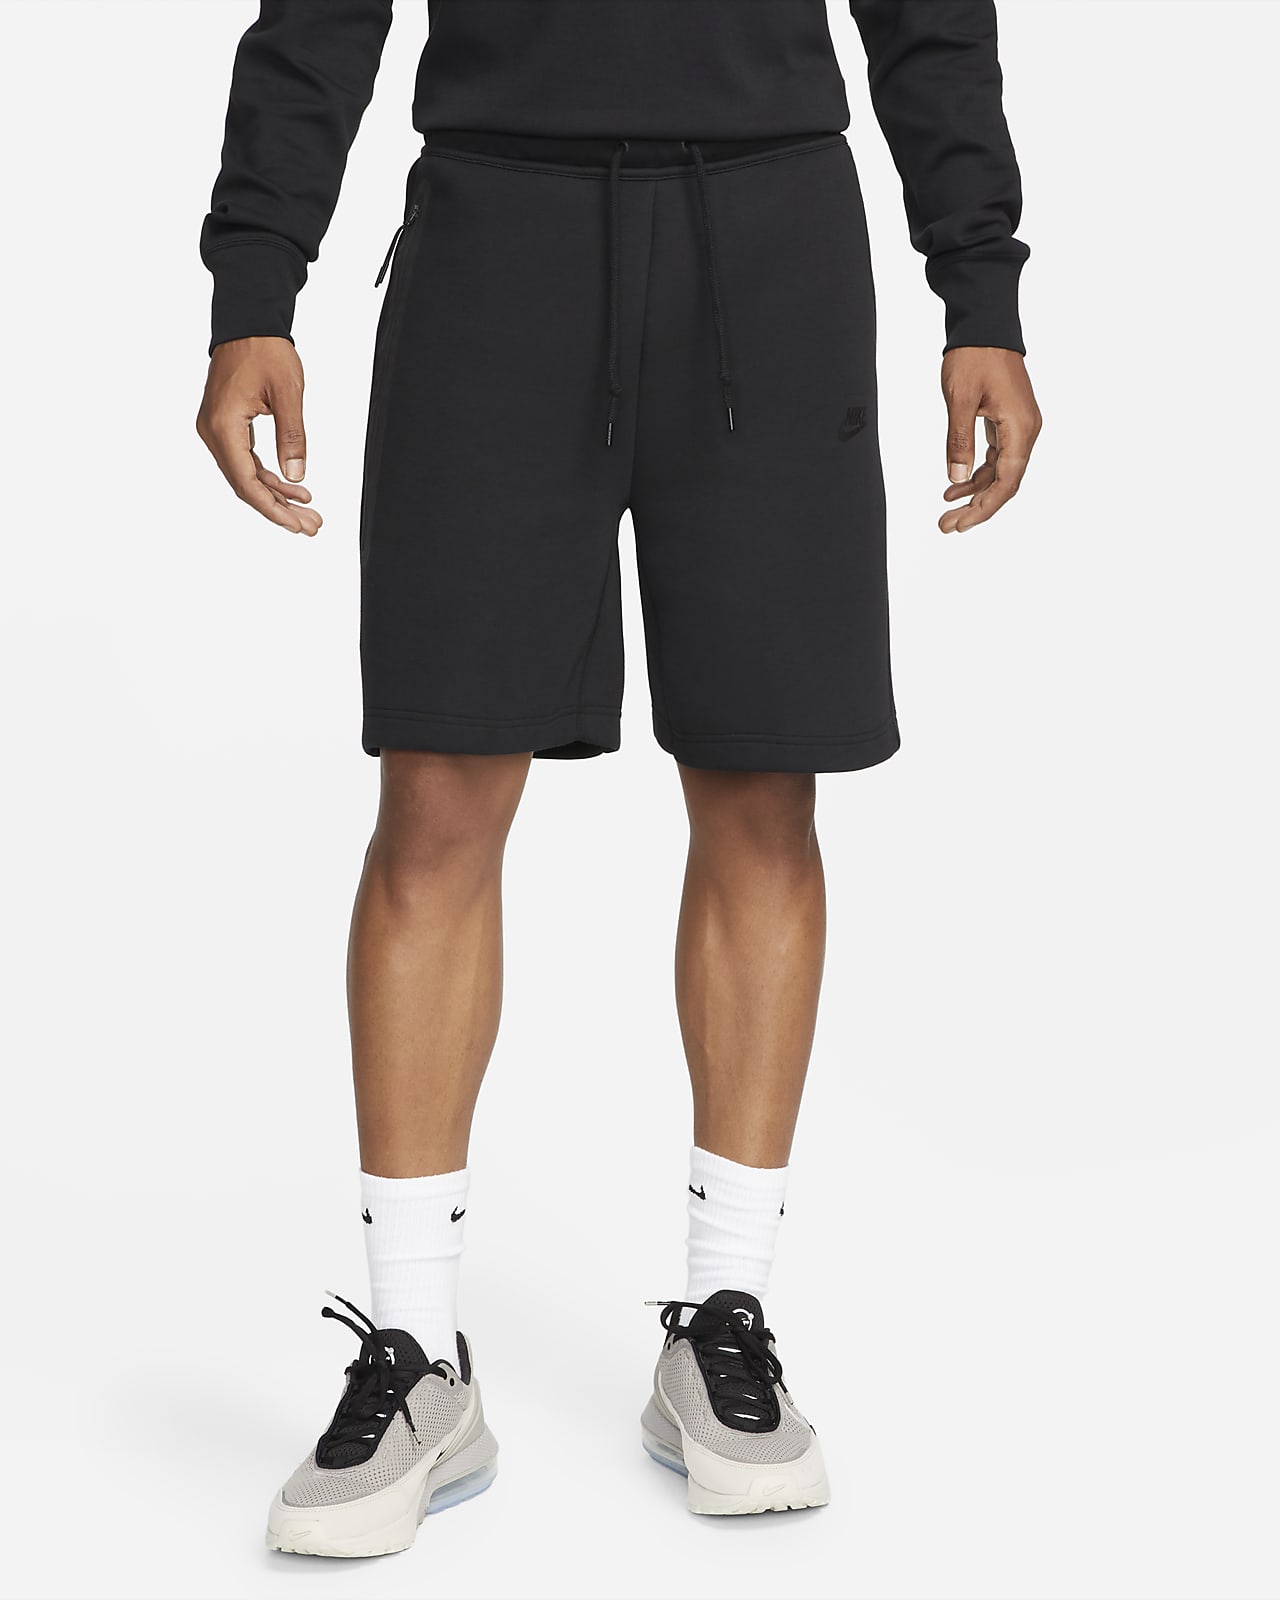 Nike Sportswear Tech Fleece Pantalons curts - Home